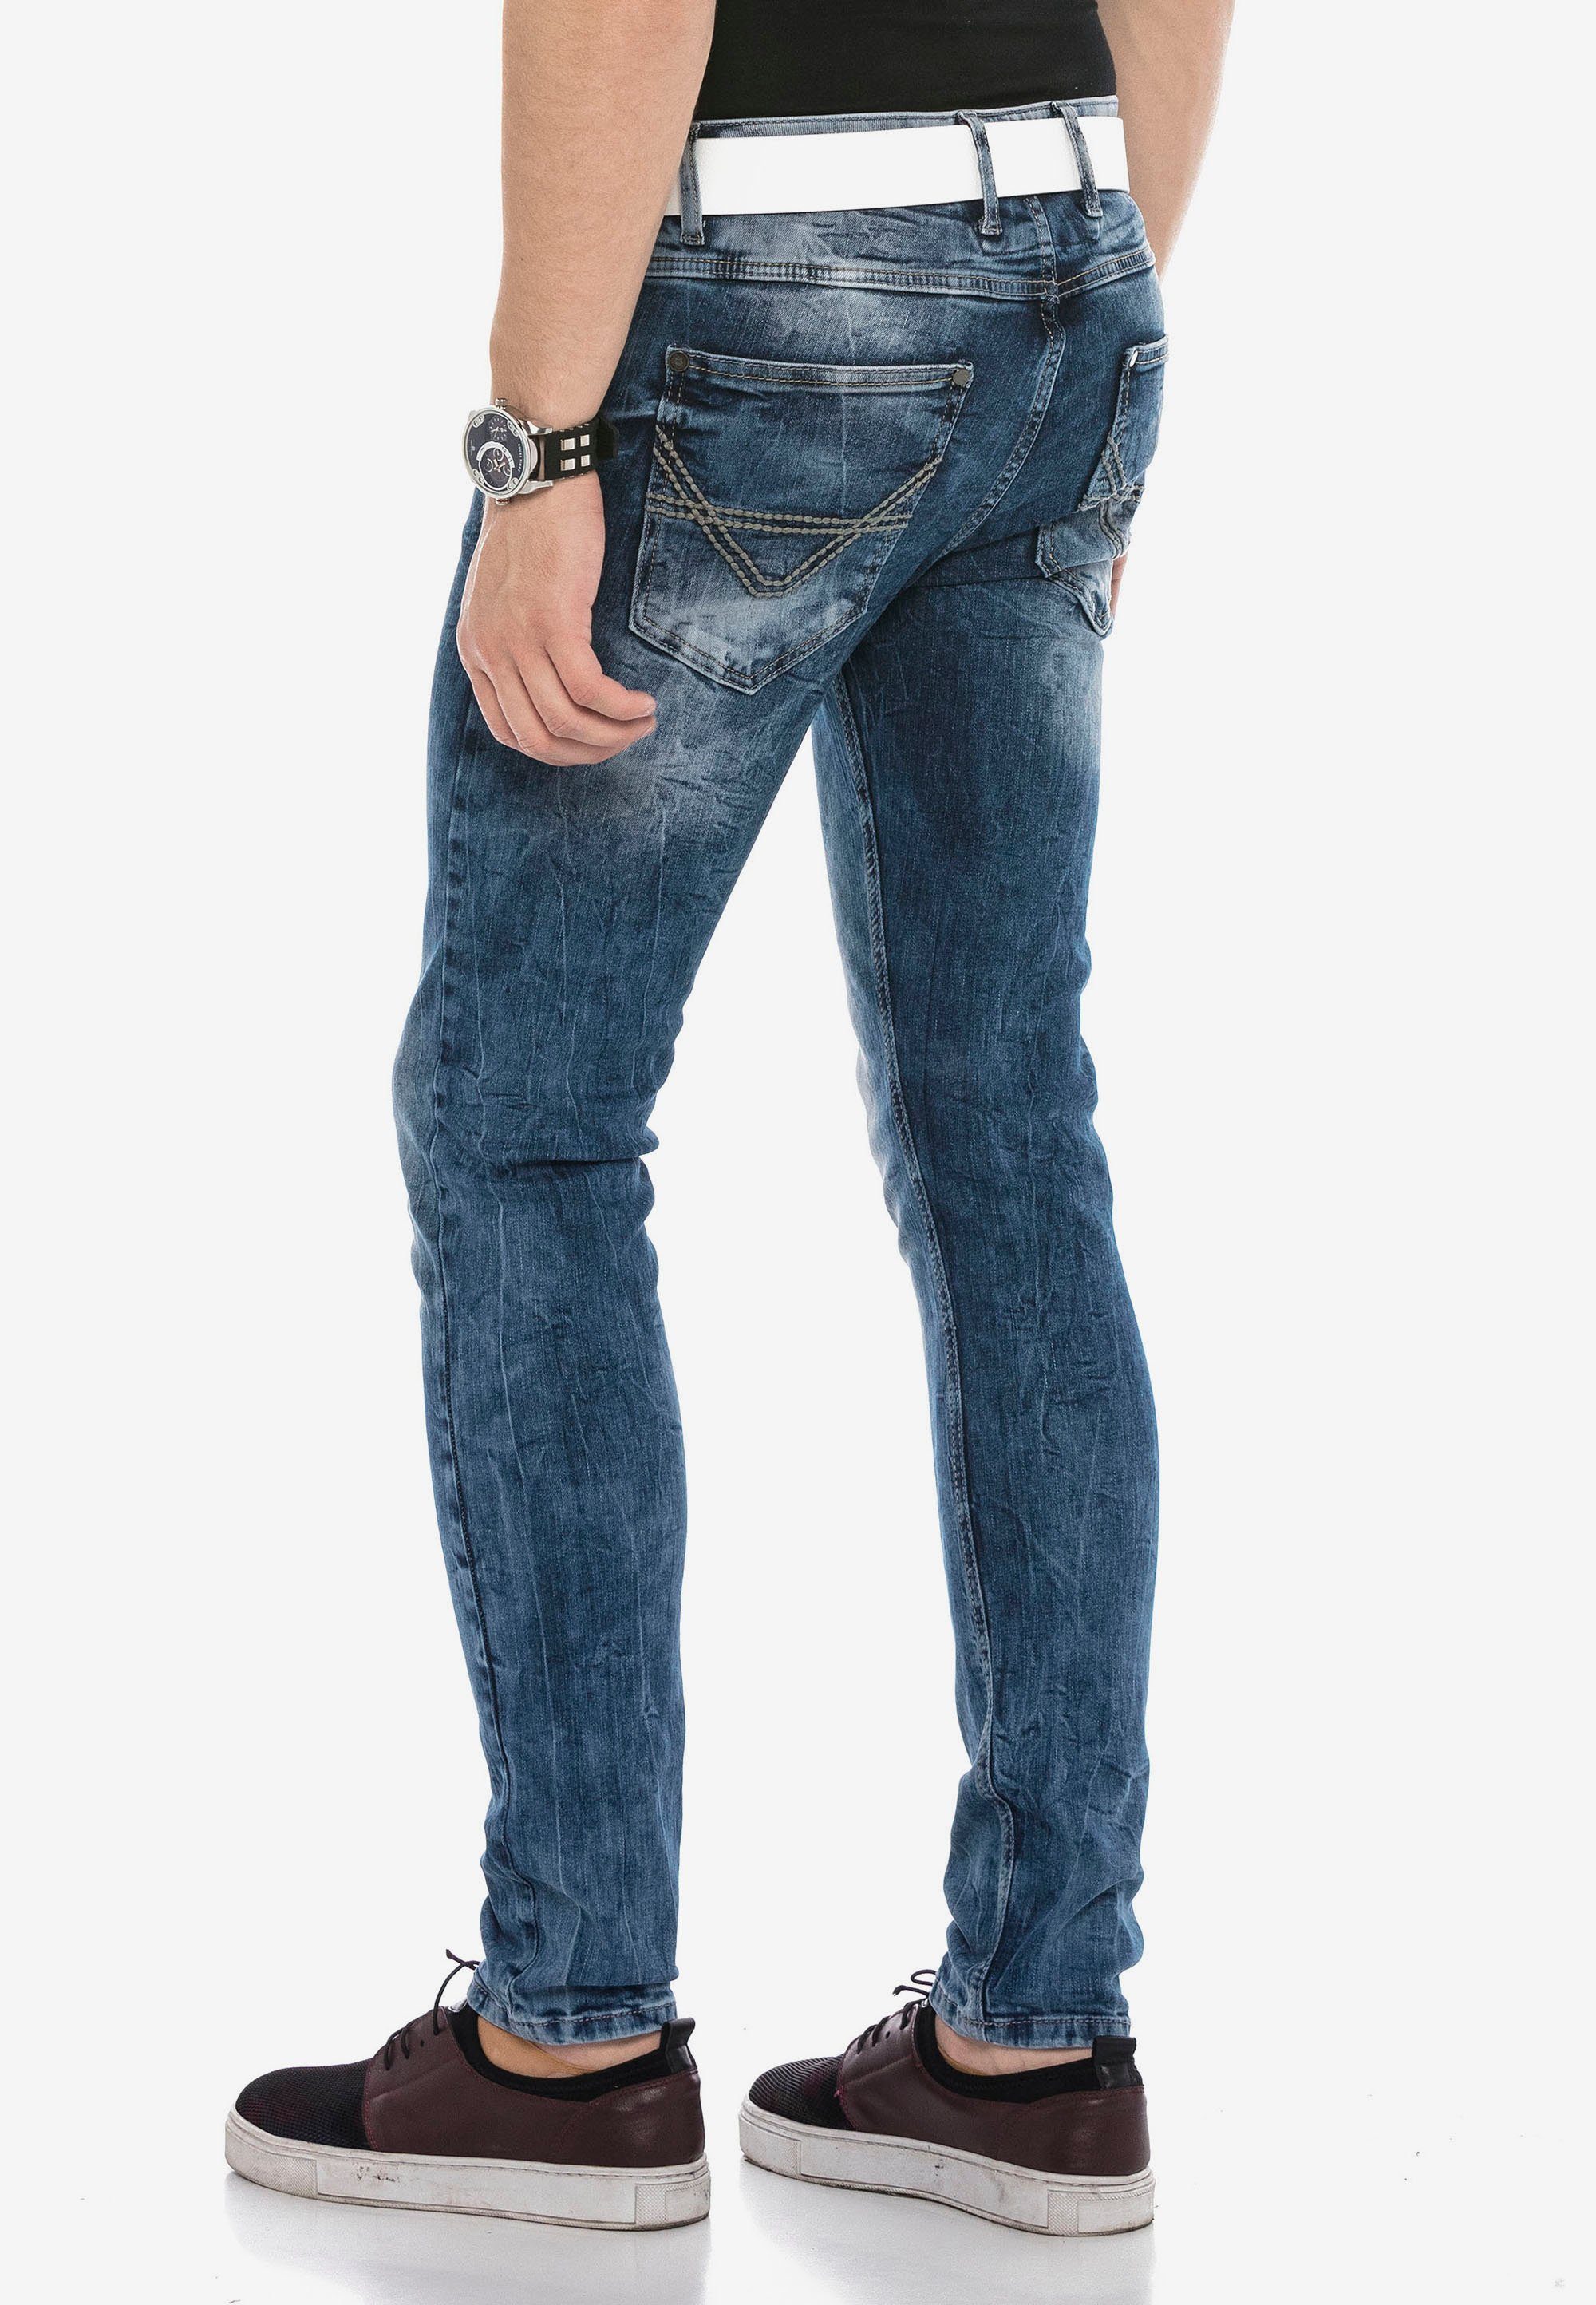 Baxx & Bequeme Jeans optimaler Slim-Straight Passform in mit Fit Cipo blau